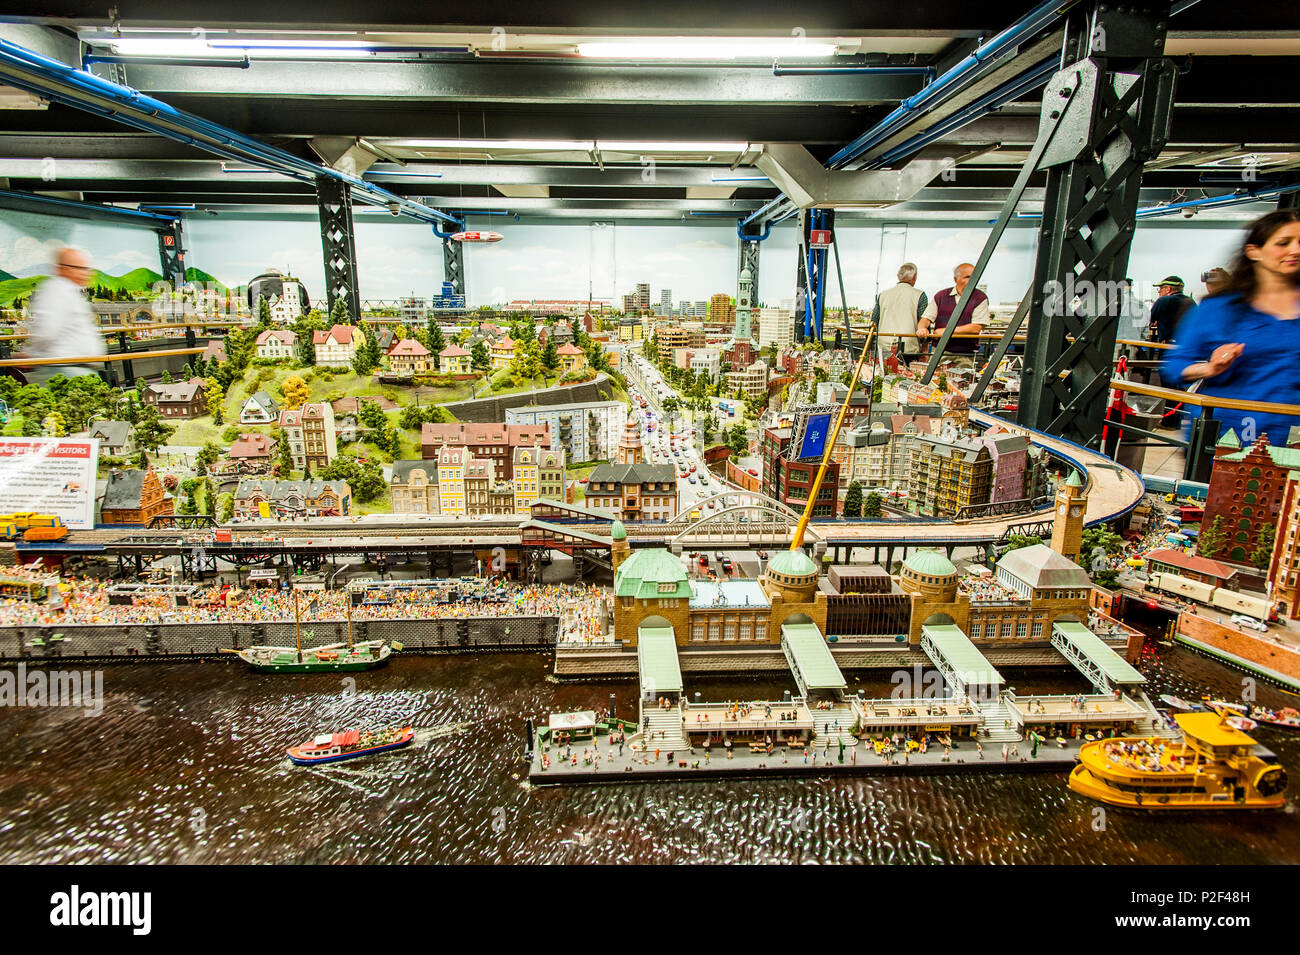 Miniatur wunderland, largest model railway exhibition in the world, Hafencity of Hamburg, north Germany, Germany Stock Photo